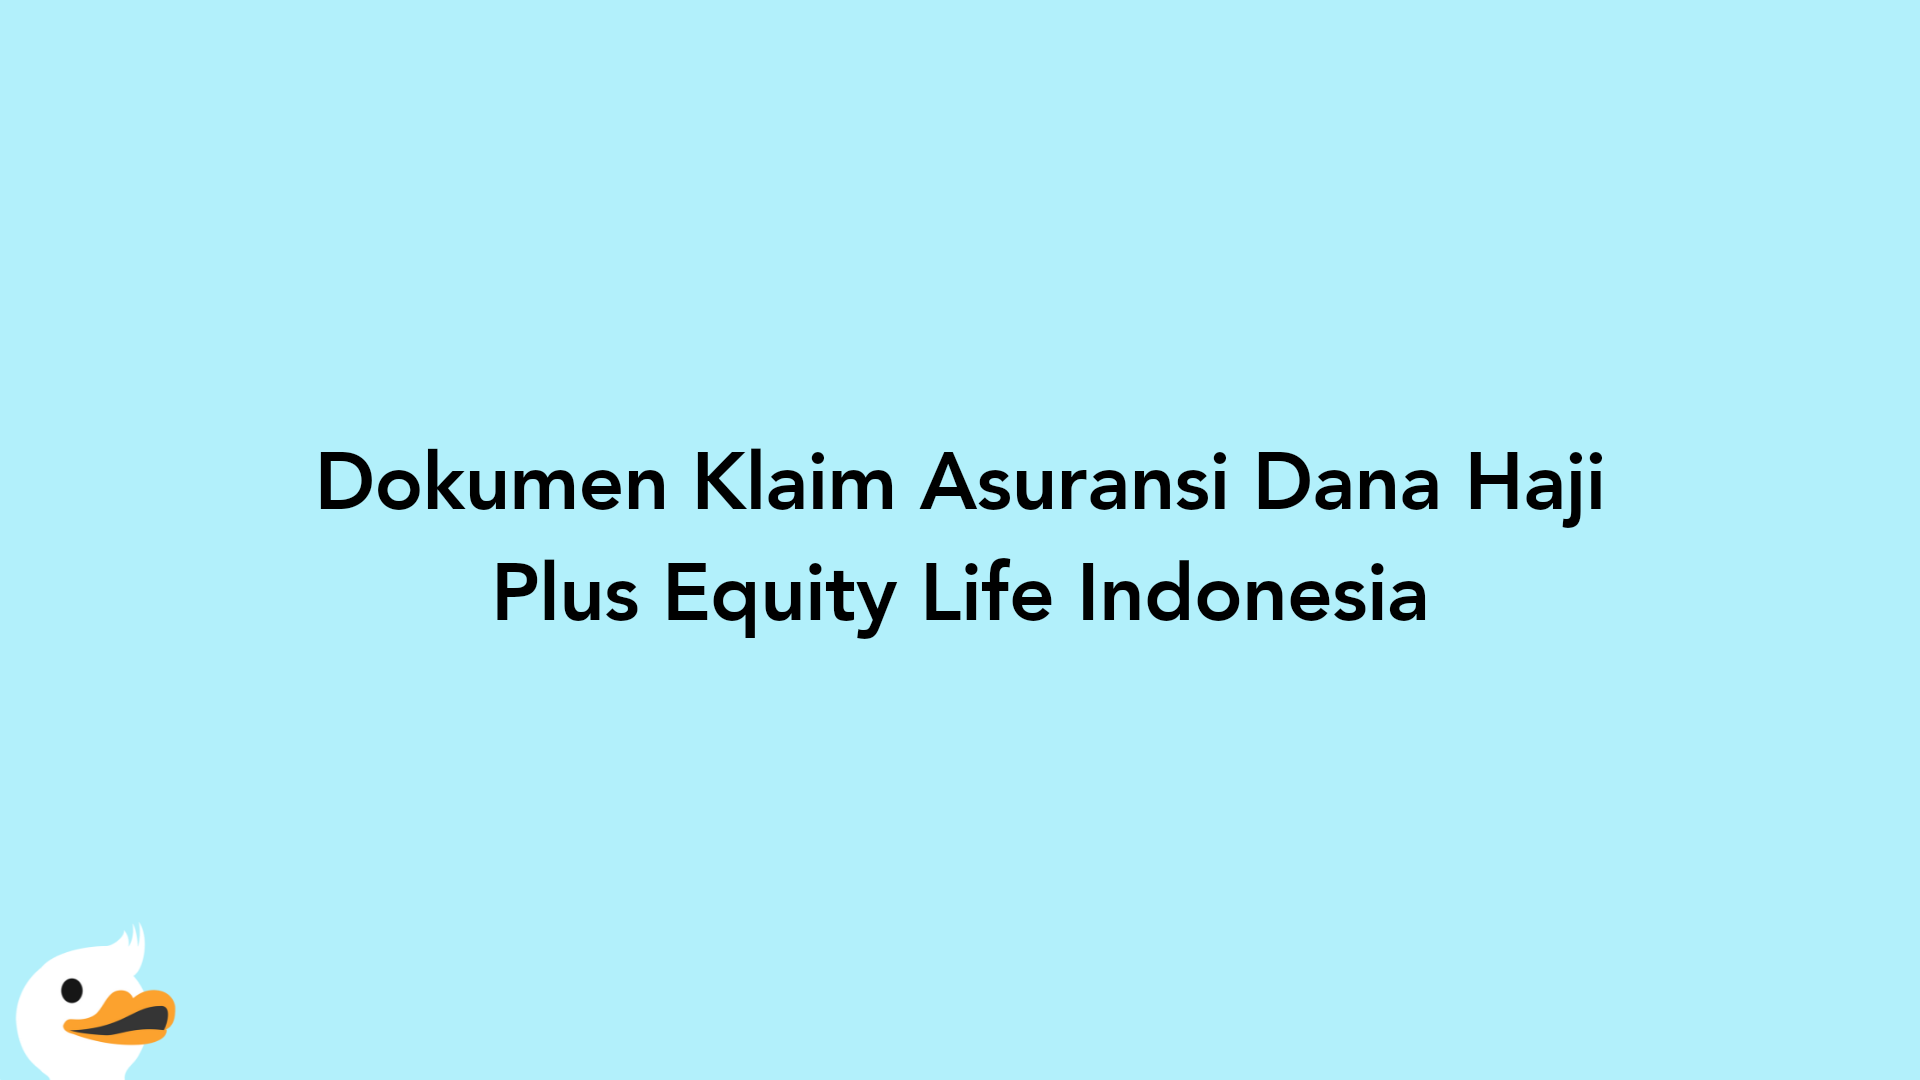 Dokumen Klaim Asuransi Dana Haji Plus Equity Life Indonesia